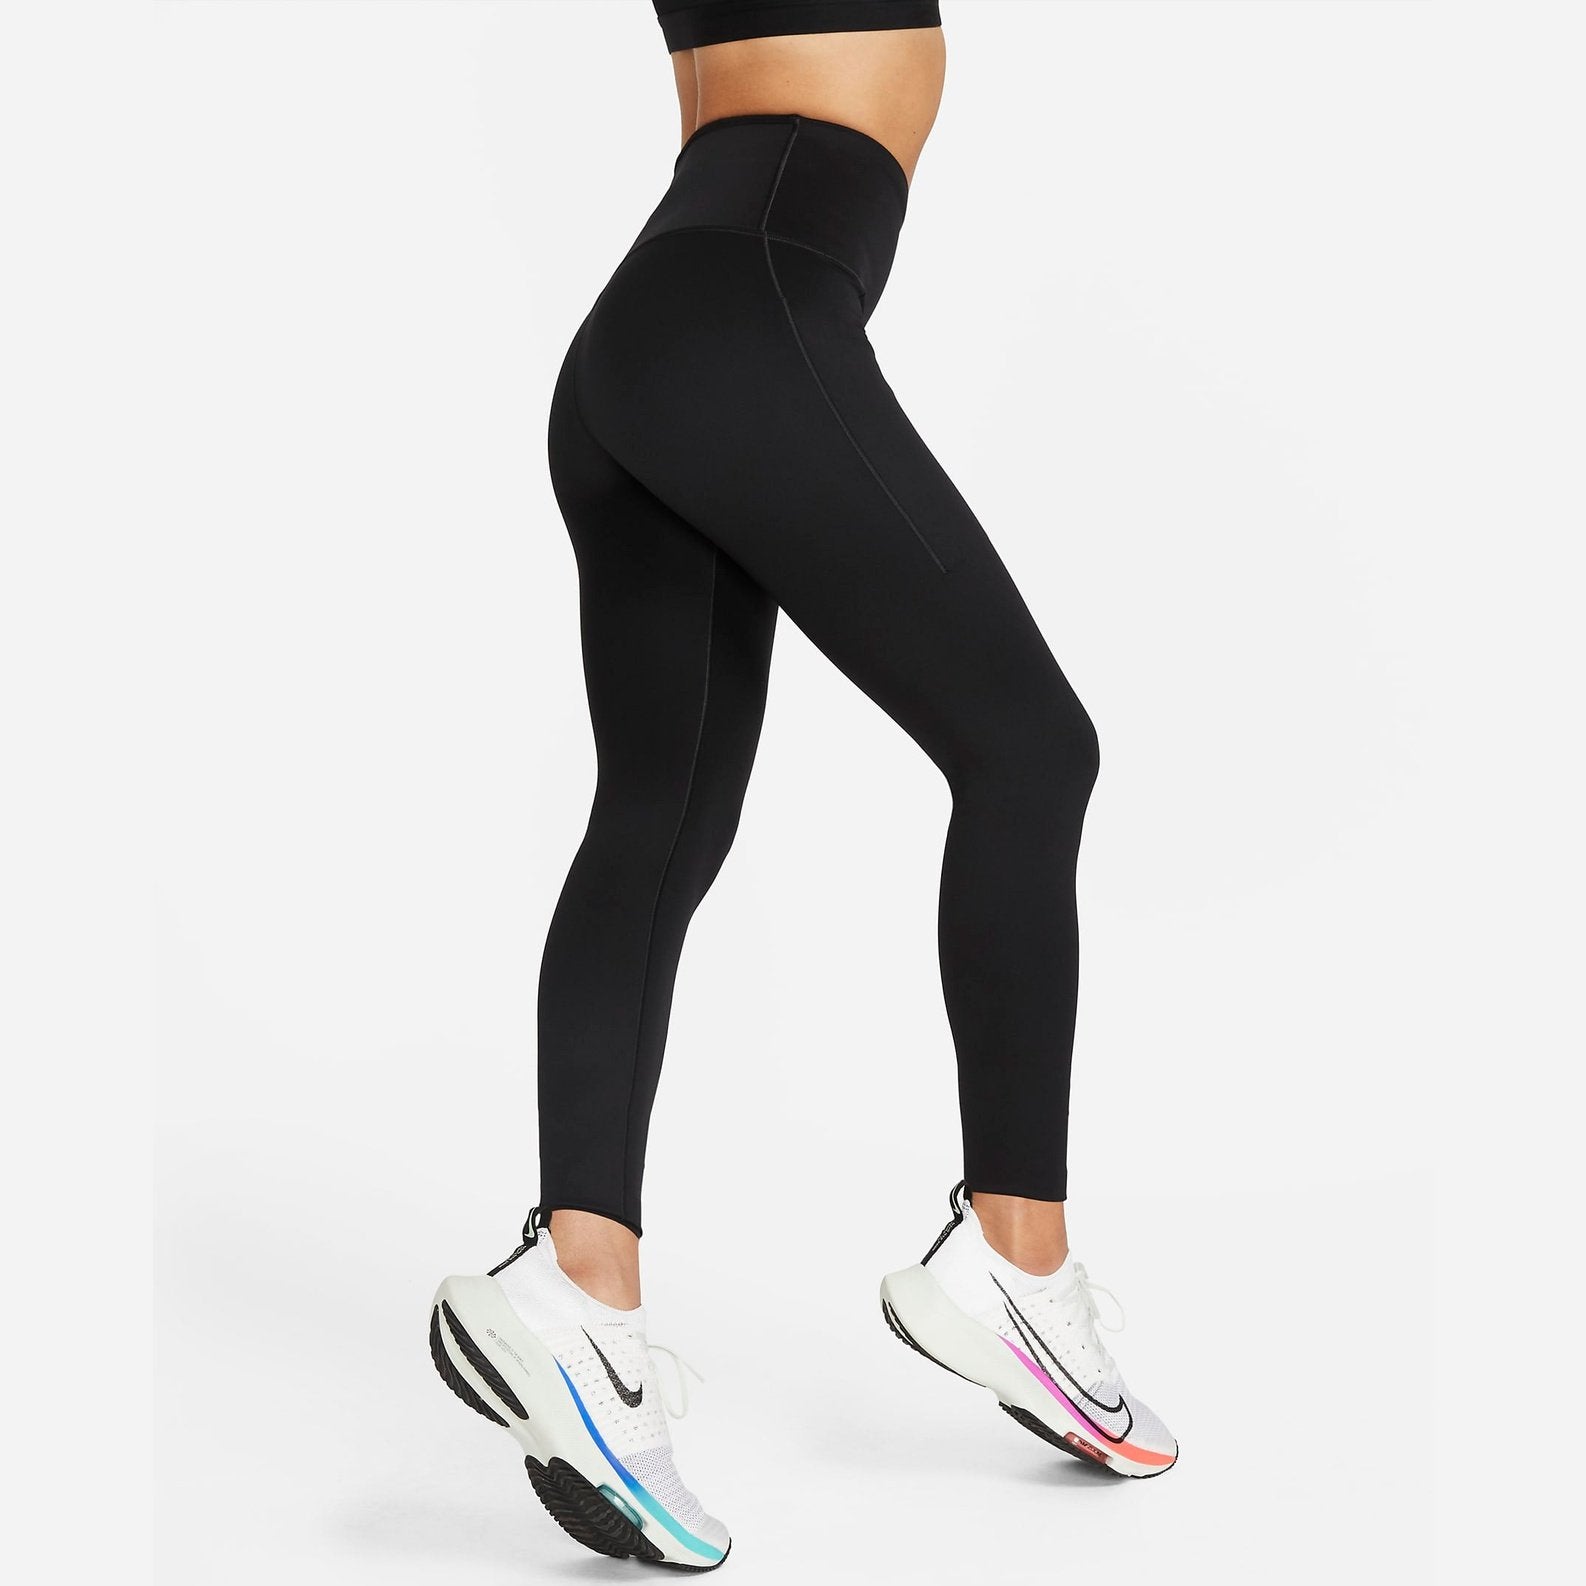 Women's Dri-Fit Go High Rise 7/8 Legging, Plus Size from Nike